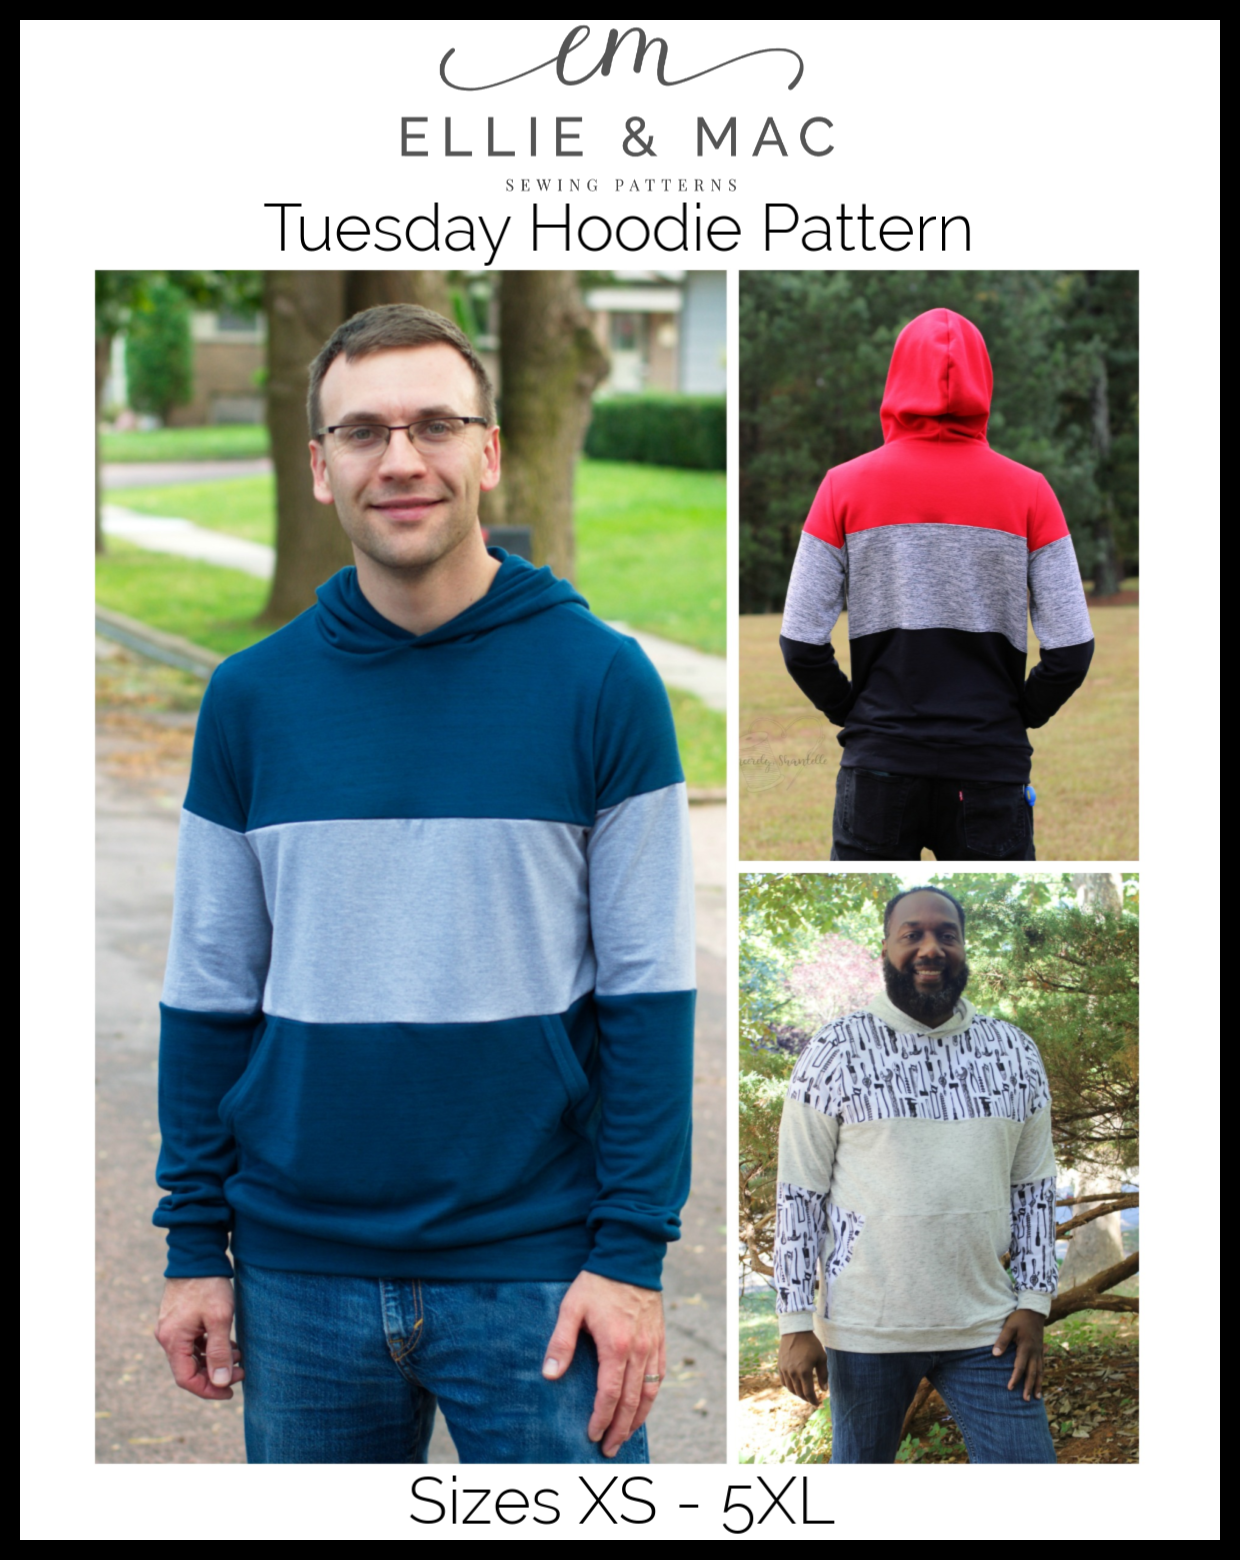 Tuesday Hoodie Pattern